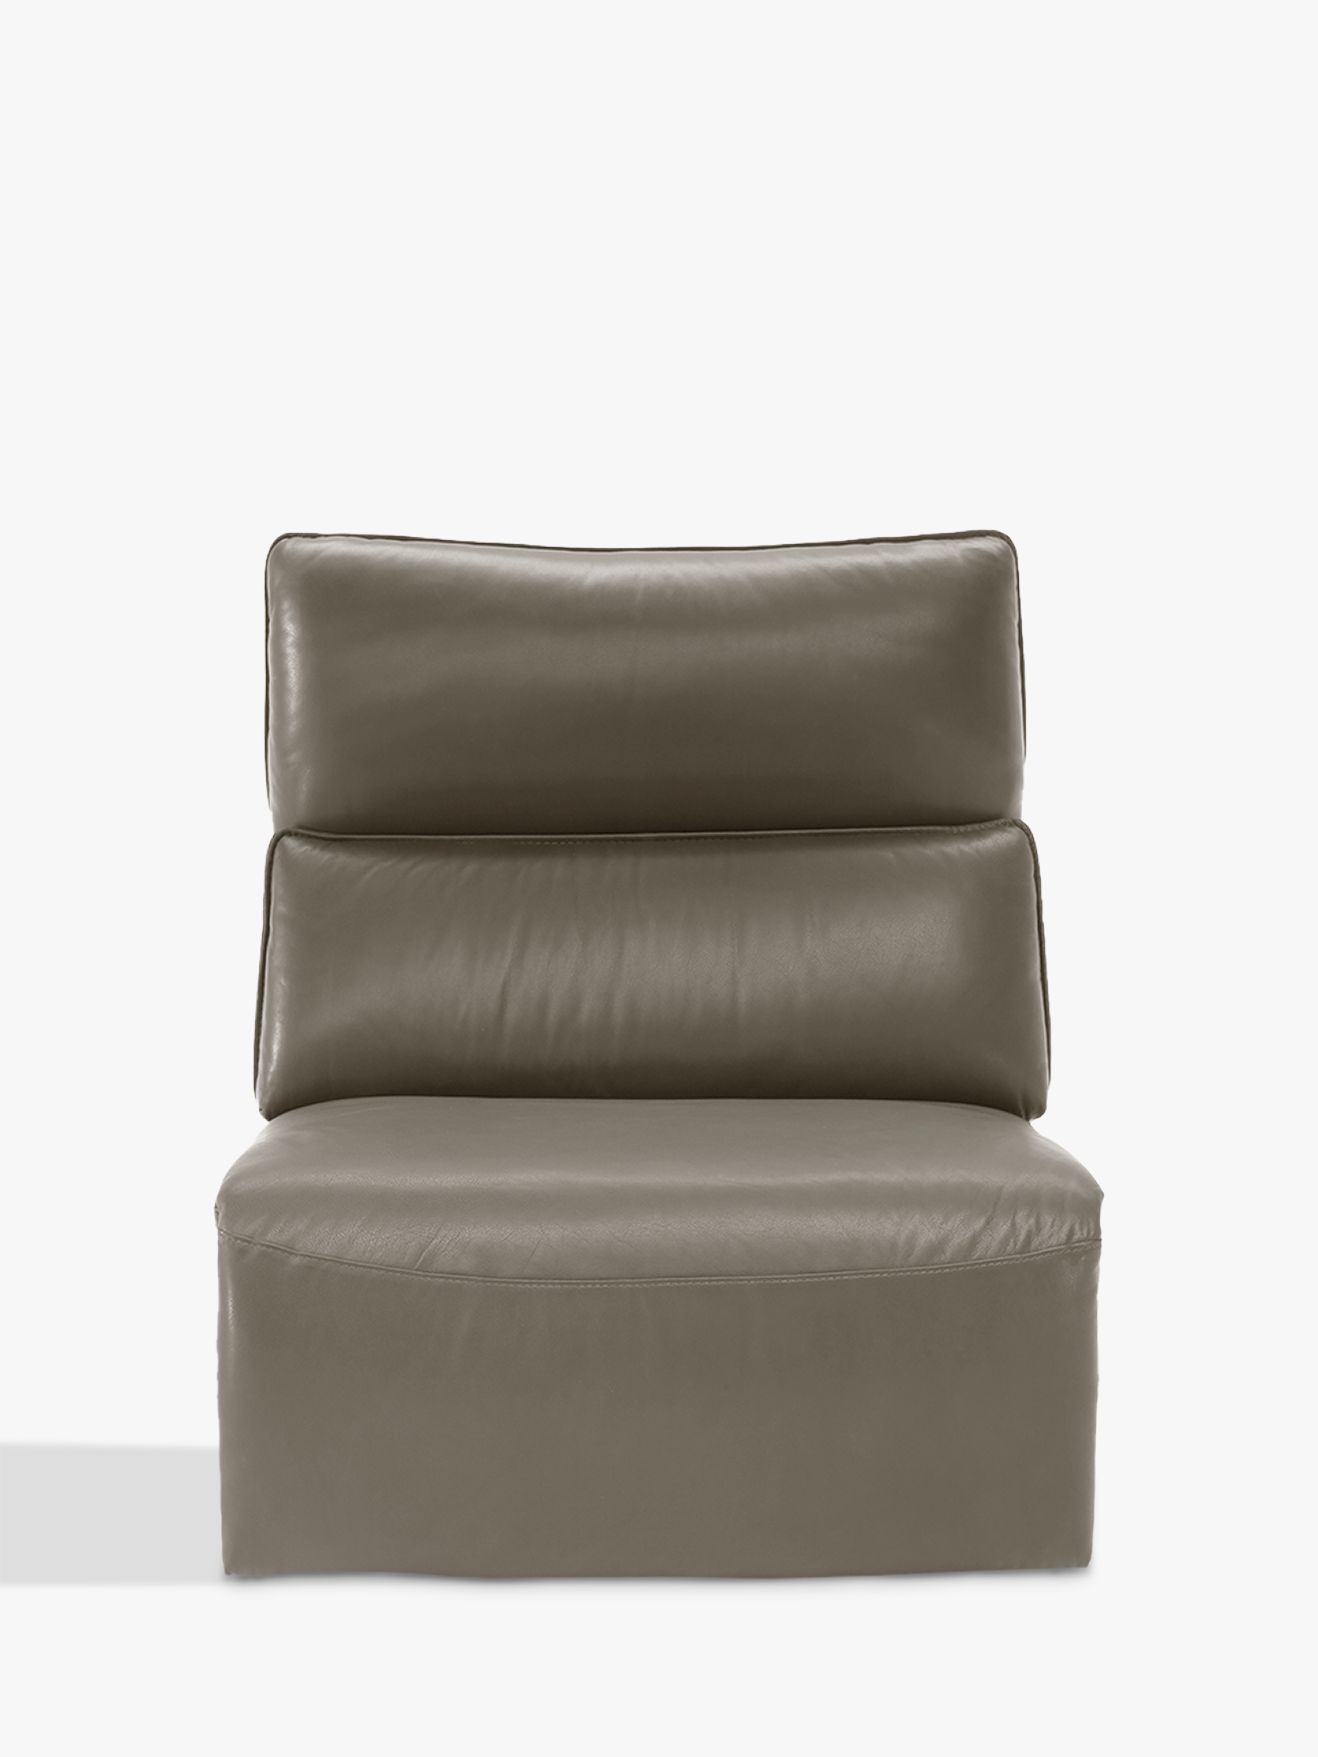 Natuzzi Stupore 001 Modular Armless Leather Armchair at ...